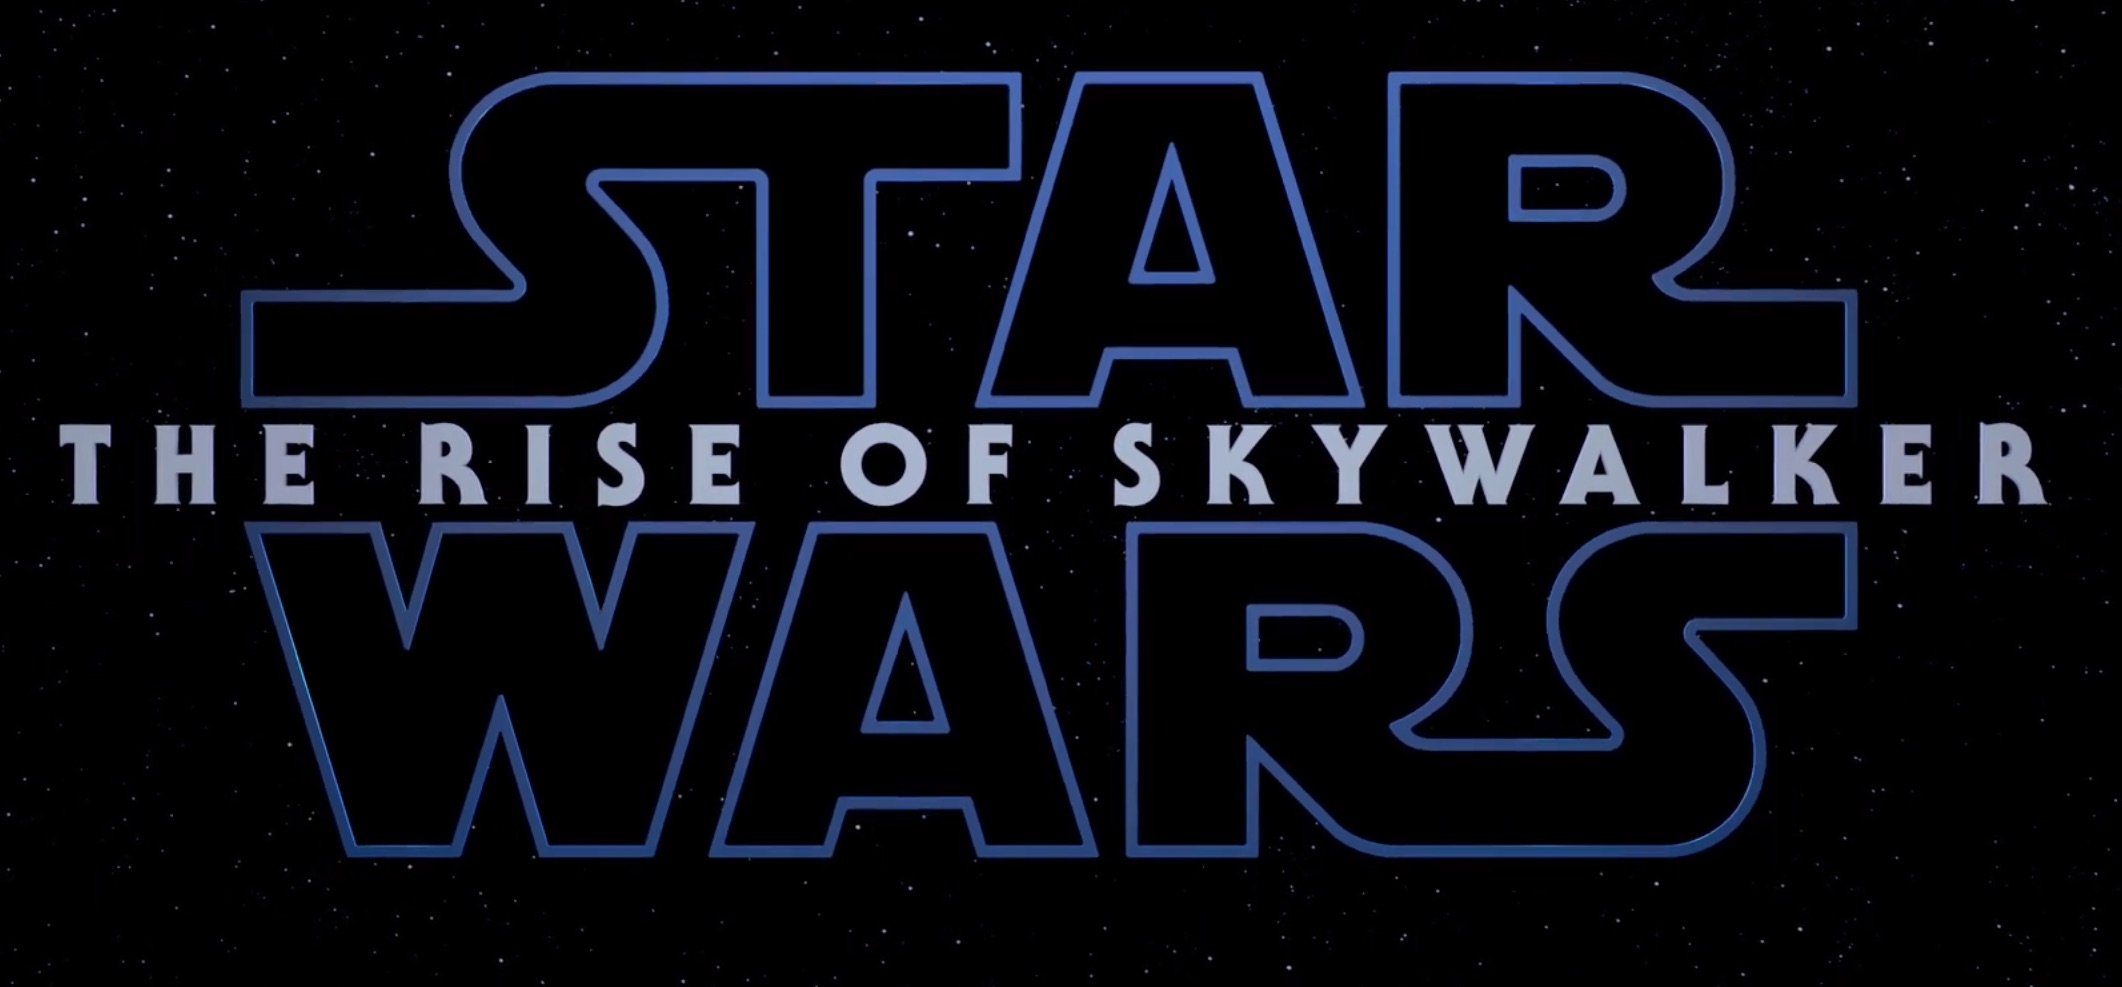 Star Wars Episode IX title revealed